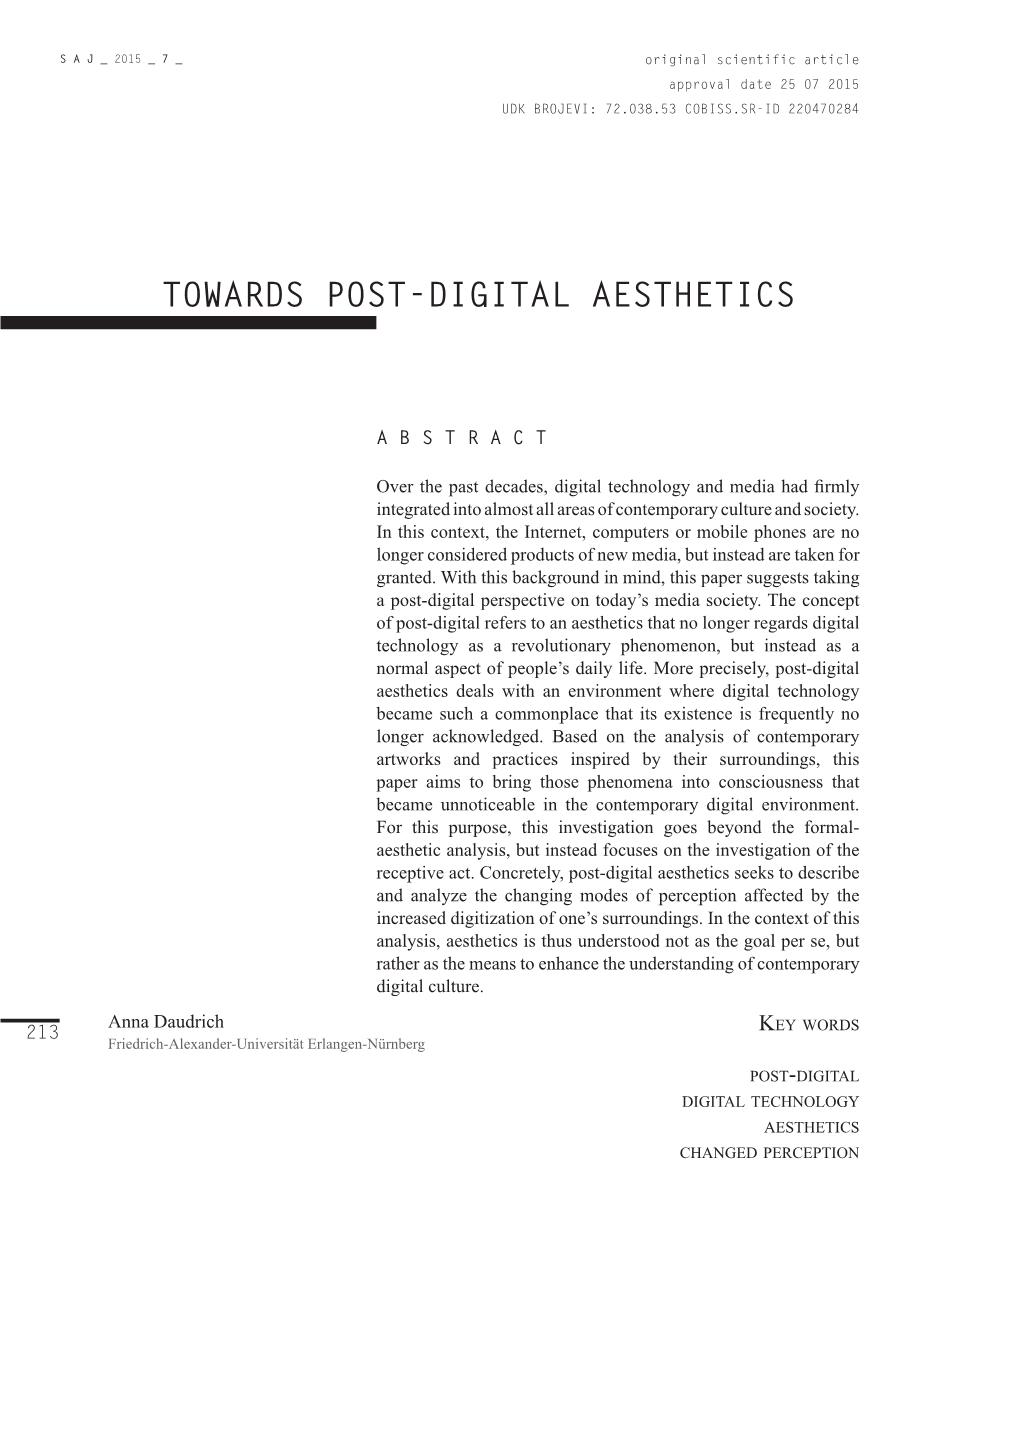 Towards Post-Digital Aesthetics